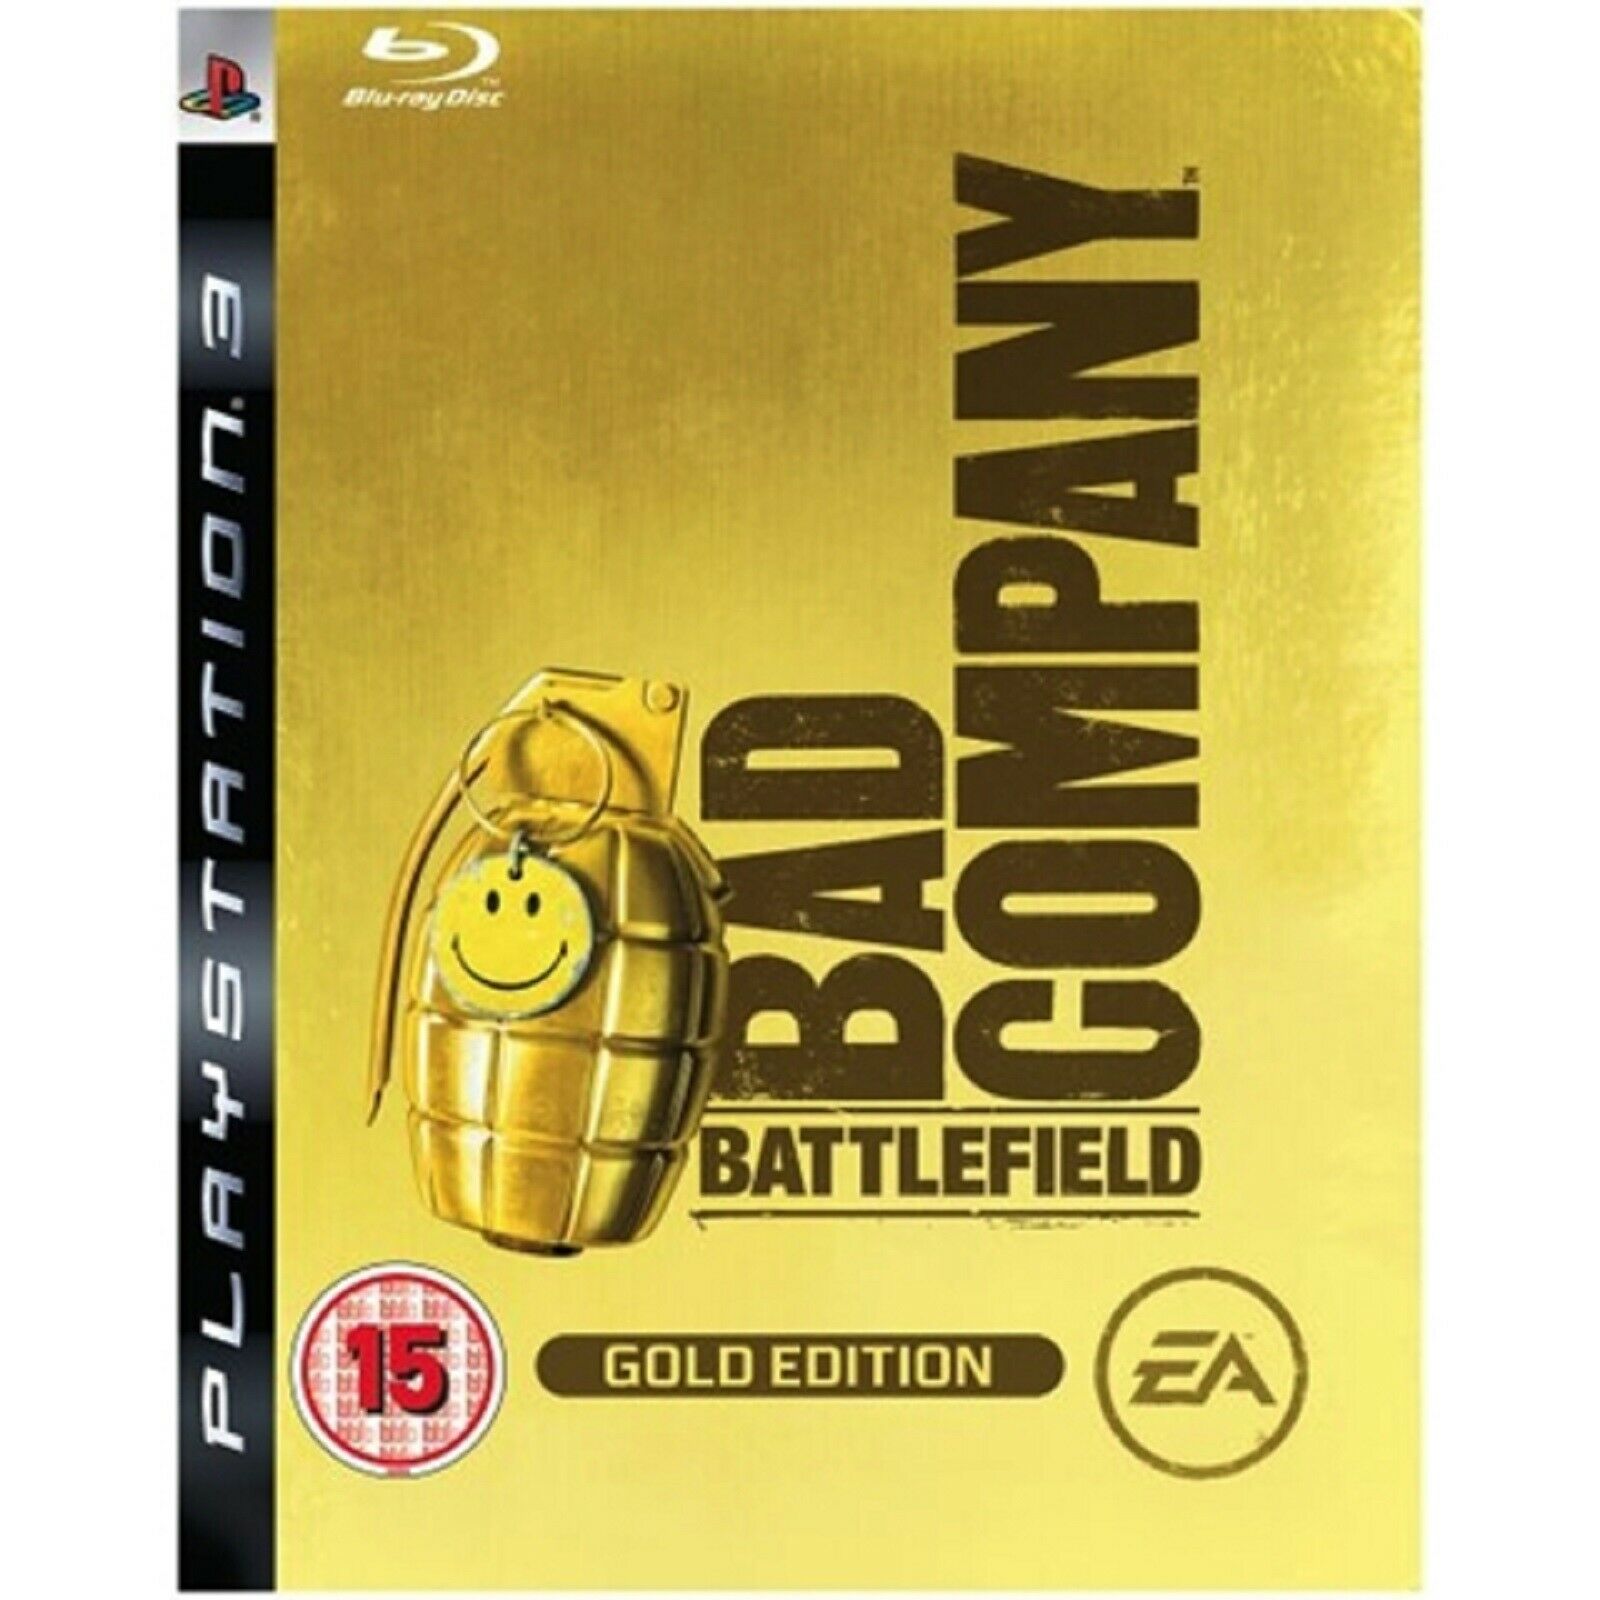 Battlefield Bad Company Gold Edition Steelbook - PlayStation 3 Játékok